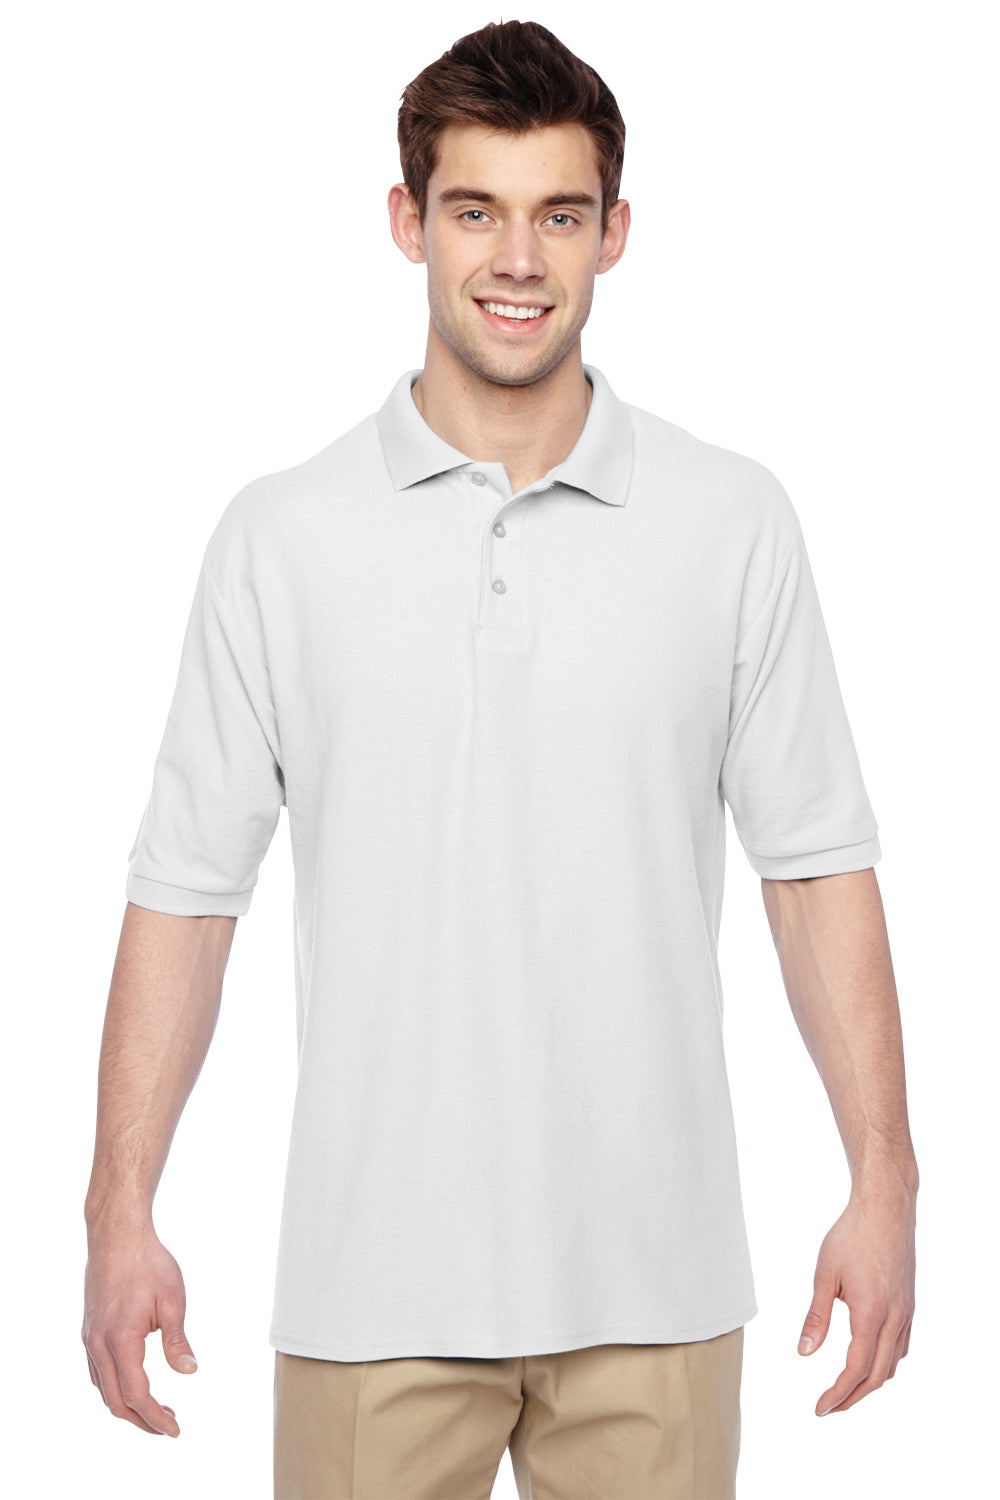 Jerzees 537MSR Mens Easy Care Moisture Wicking Short Sleeve Polo Shirt White Front